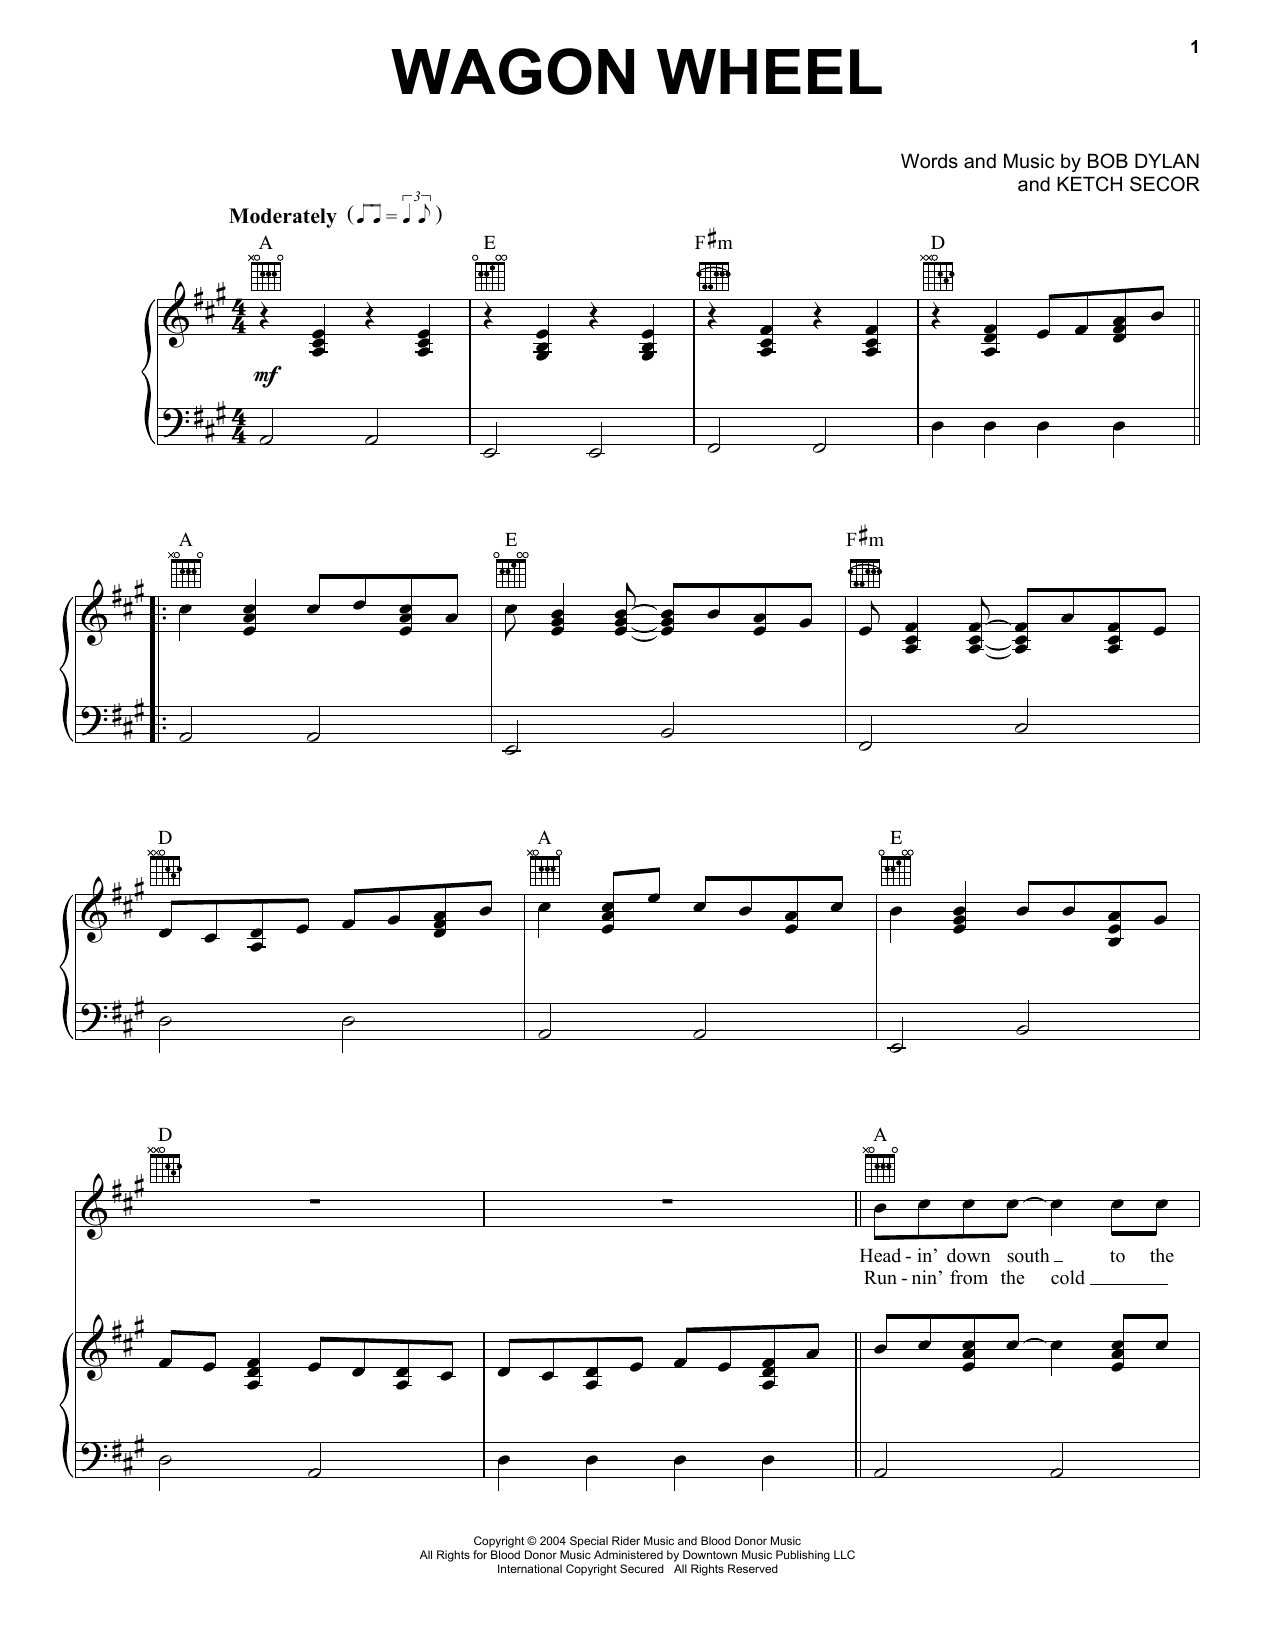 Darius Rucker Wagon Wheel Sheet Music Notes & Chords for Guitar Tab Play-Along - Download or Print PDF